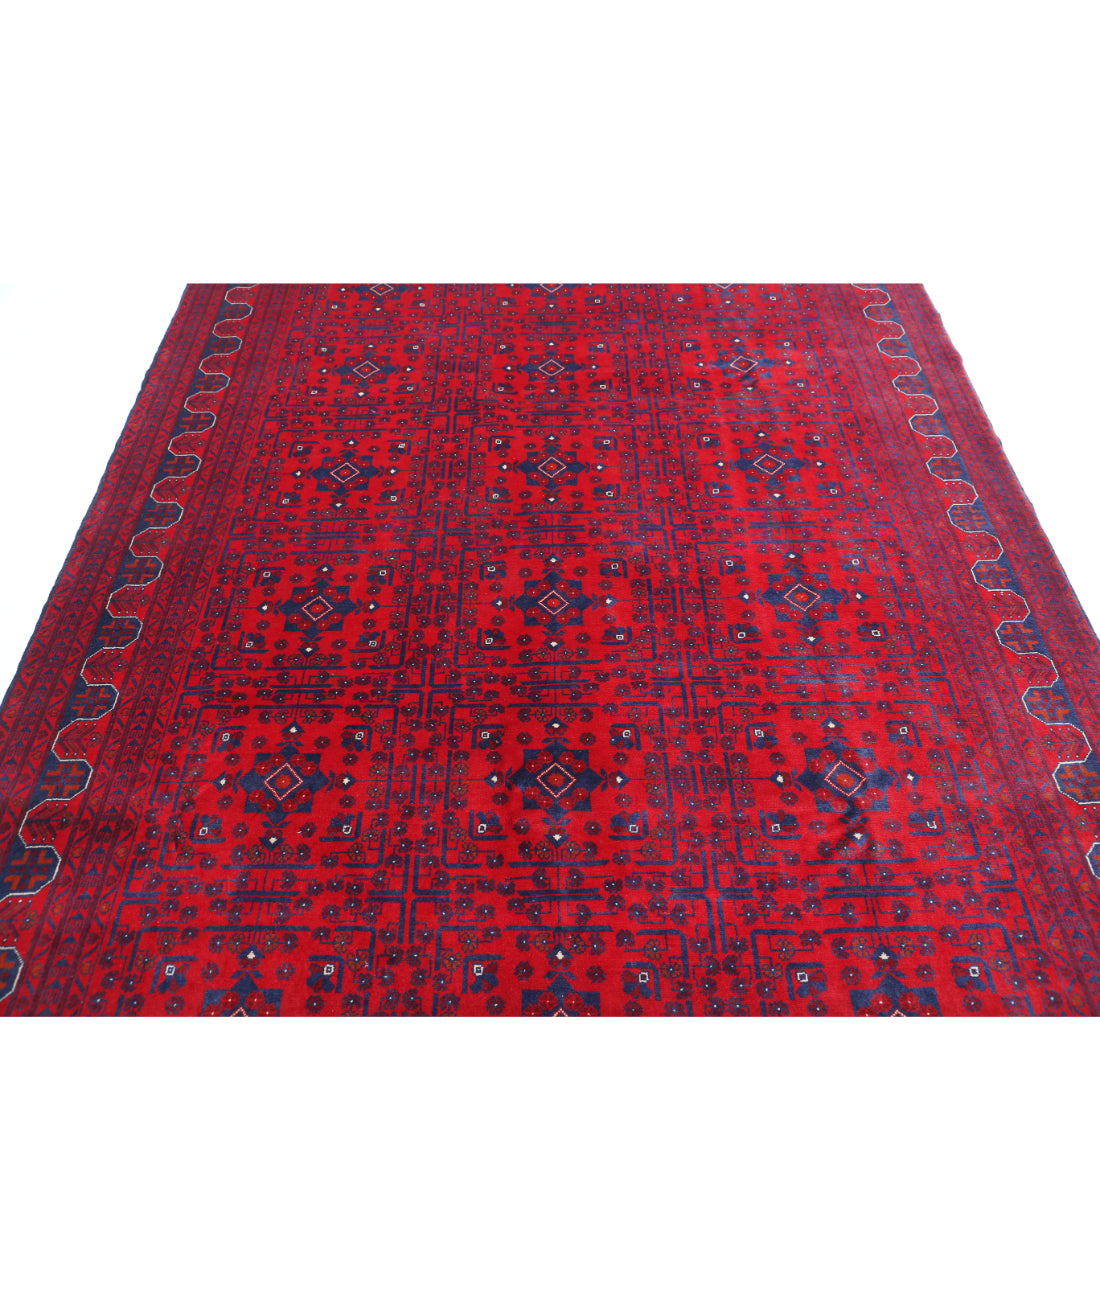 Hand Knotted Afghan Khamyab Wool Rug - 6'7'' x 9'8'' 6'7'' x 9'8'' (198 X 290) / Red / Blue